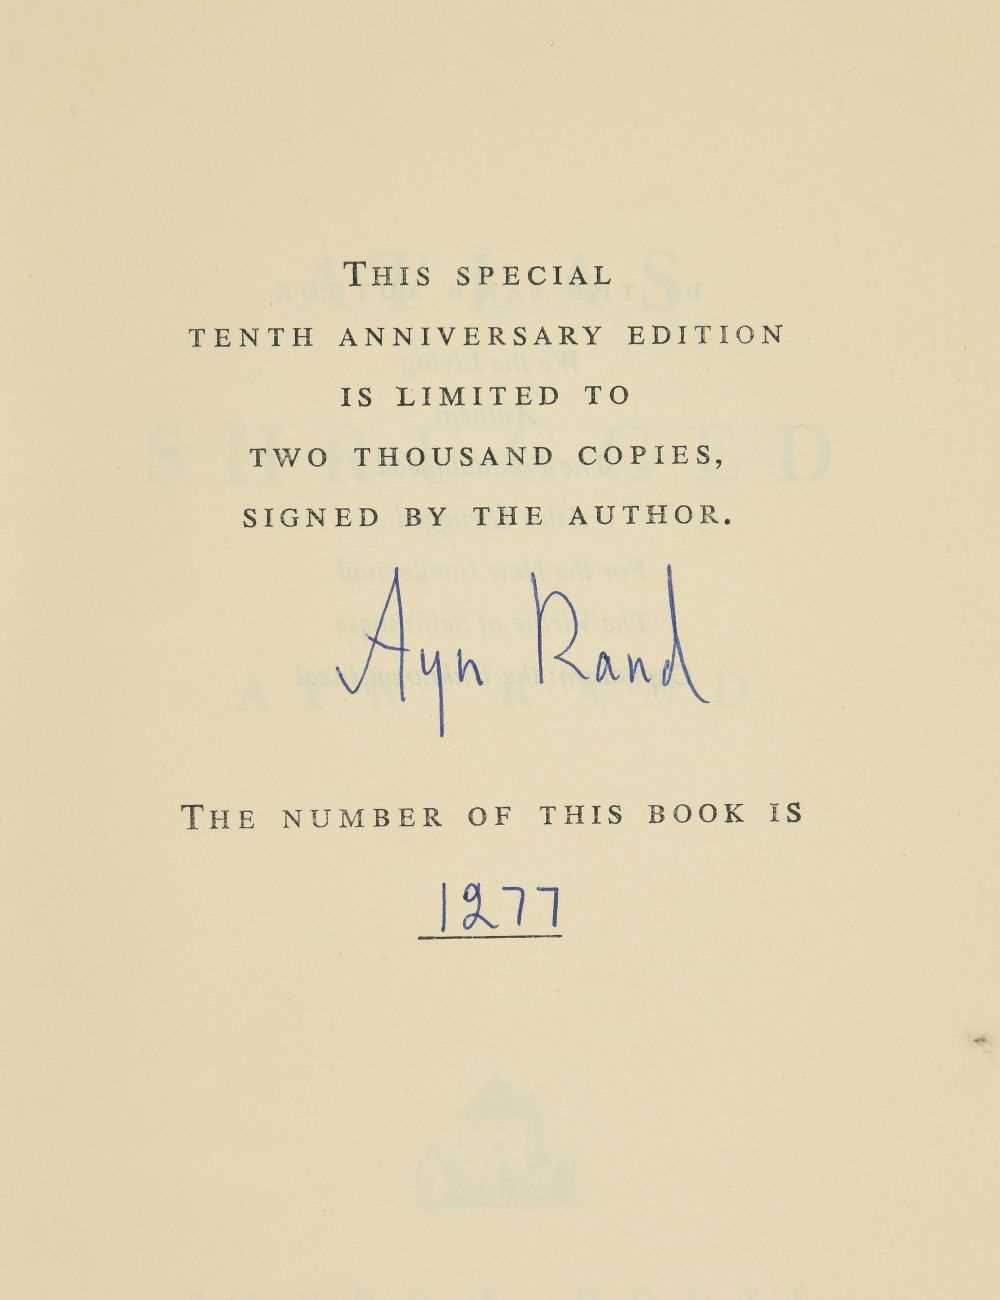 Lot 740 - Rand (Ayn). Atlas Shrugged, 10th anniversary edition, Random House, New York, 1967